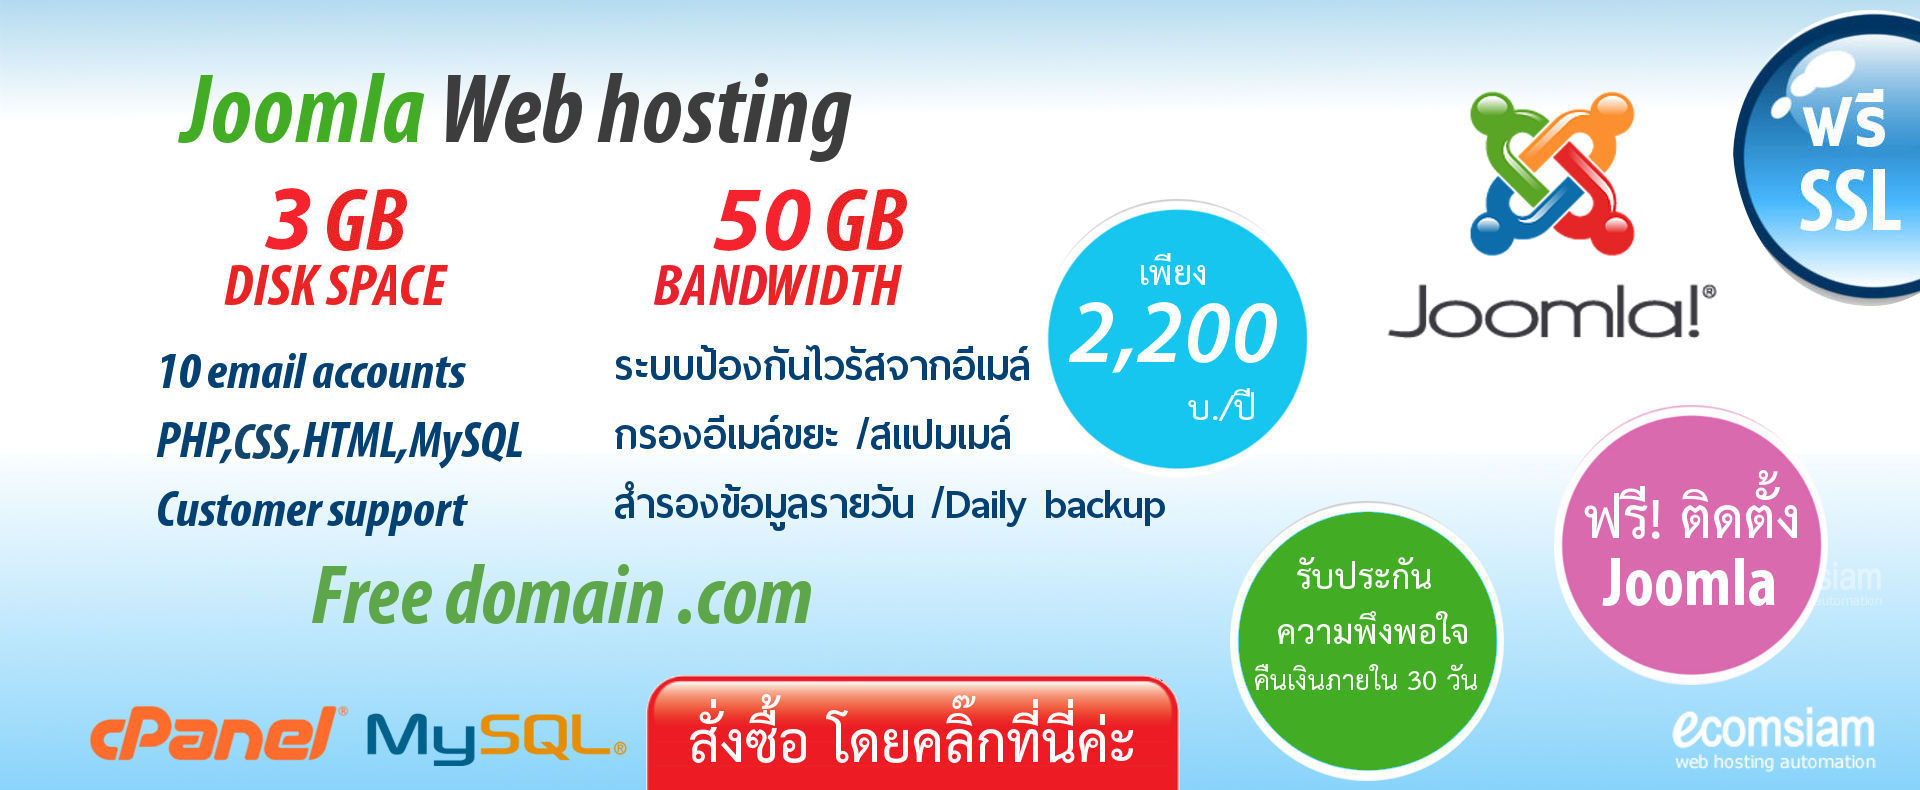 web hosting ไทย บริการเว็บโฮสติ้ง ฟรีโดเมน ฟรี SSL - joomla web hosting thailand free domain and Free SSL certificate joomla web hosting-banner